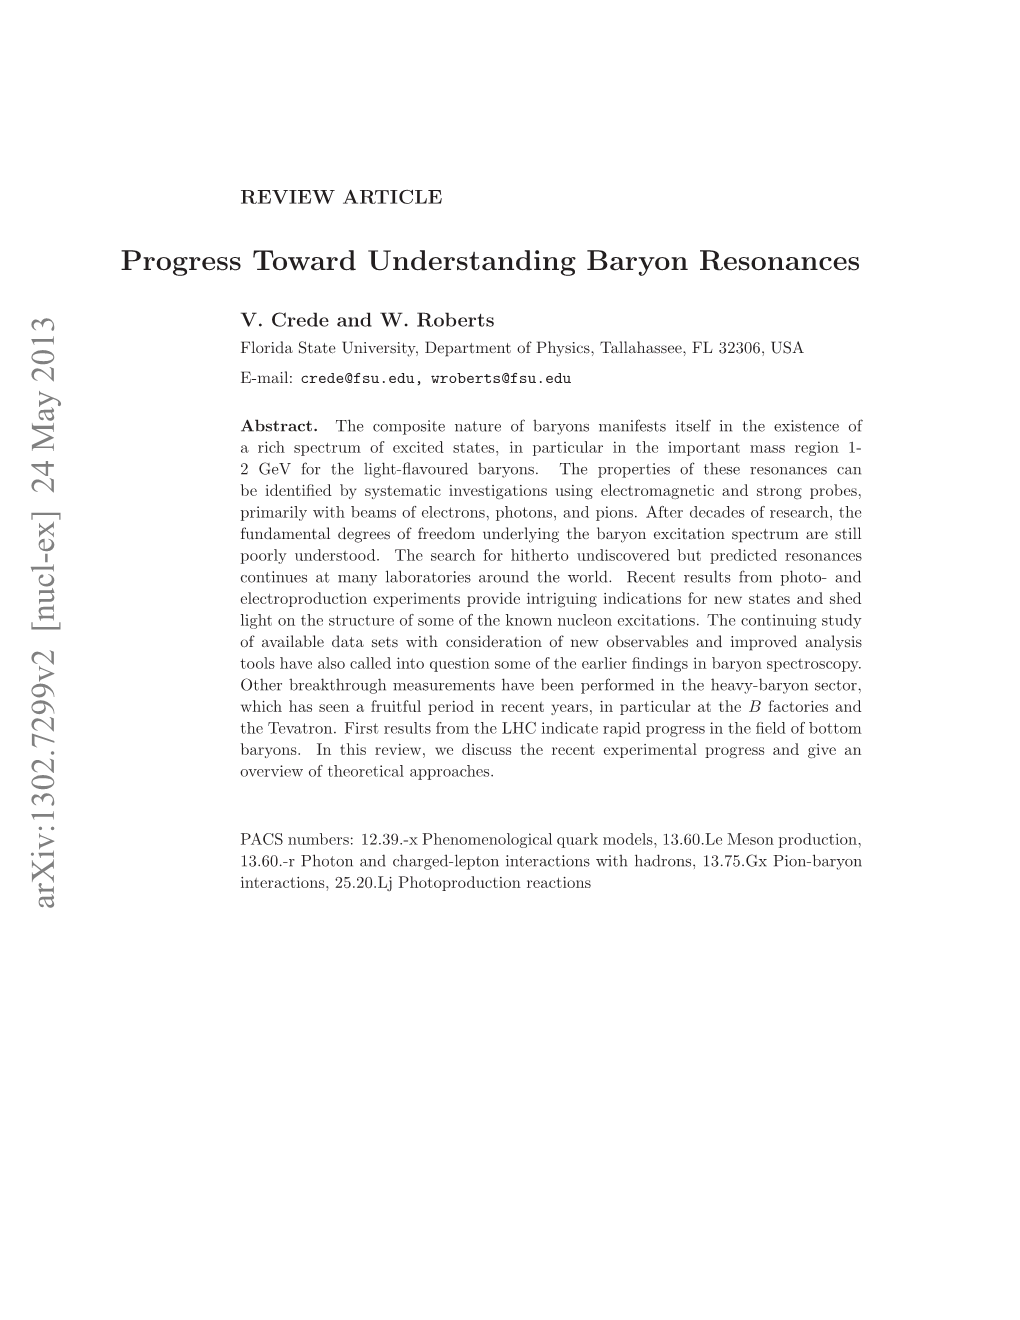 Progress Toward Understanding Baryon Resonances 2